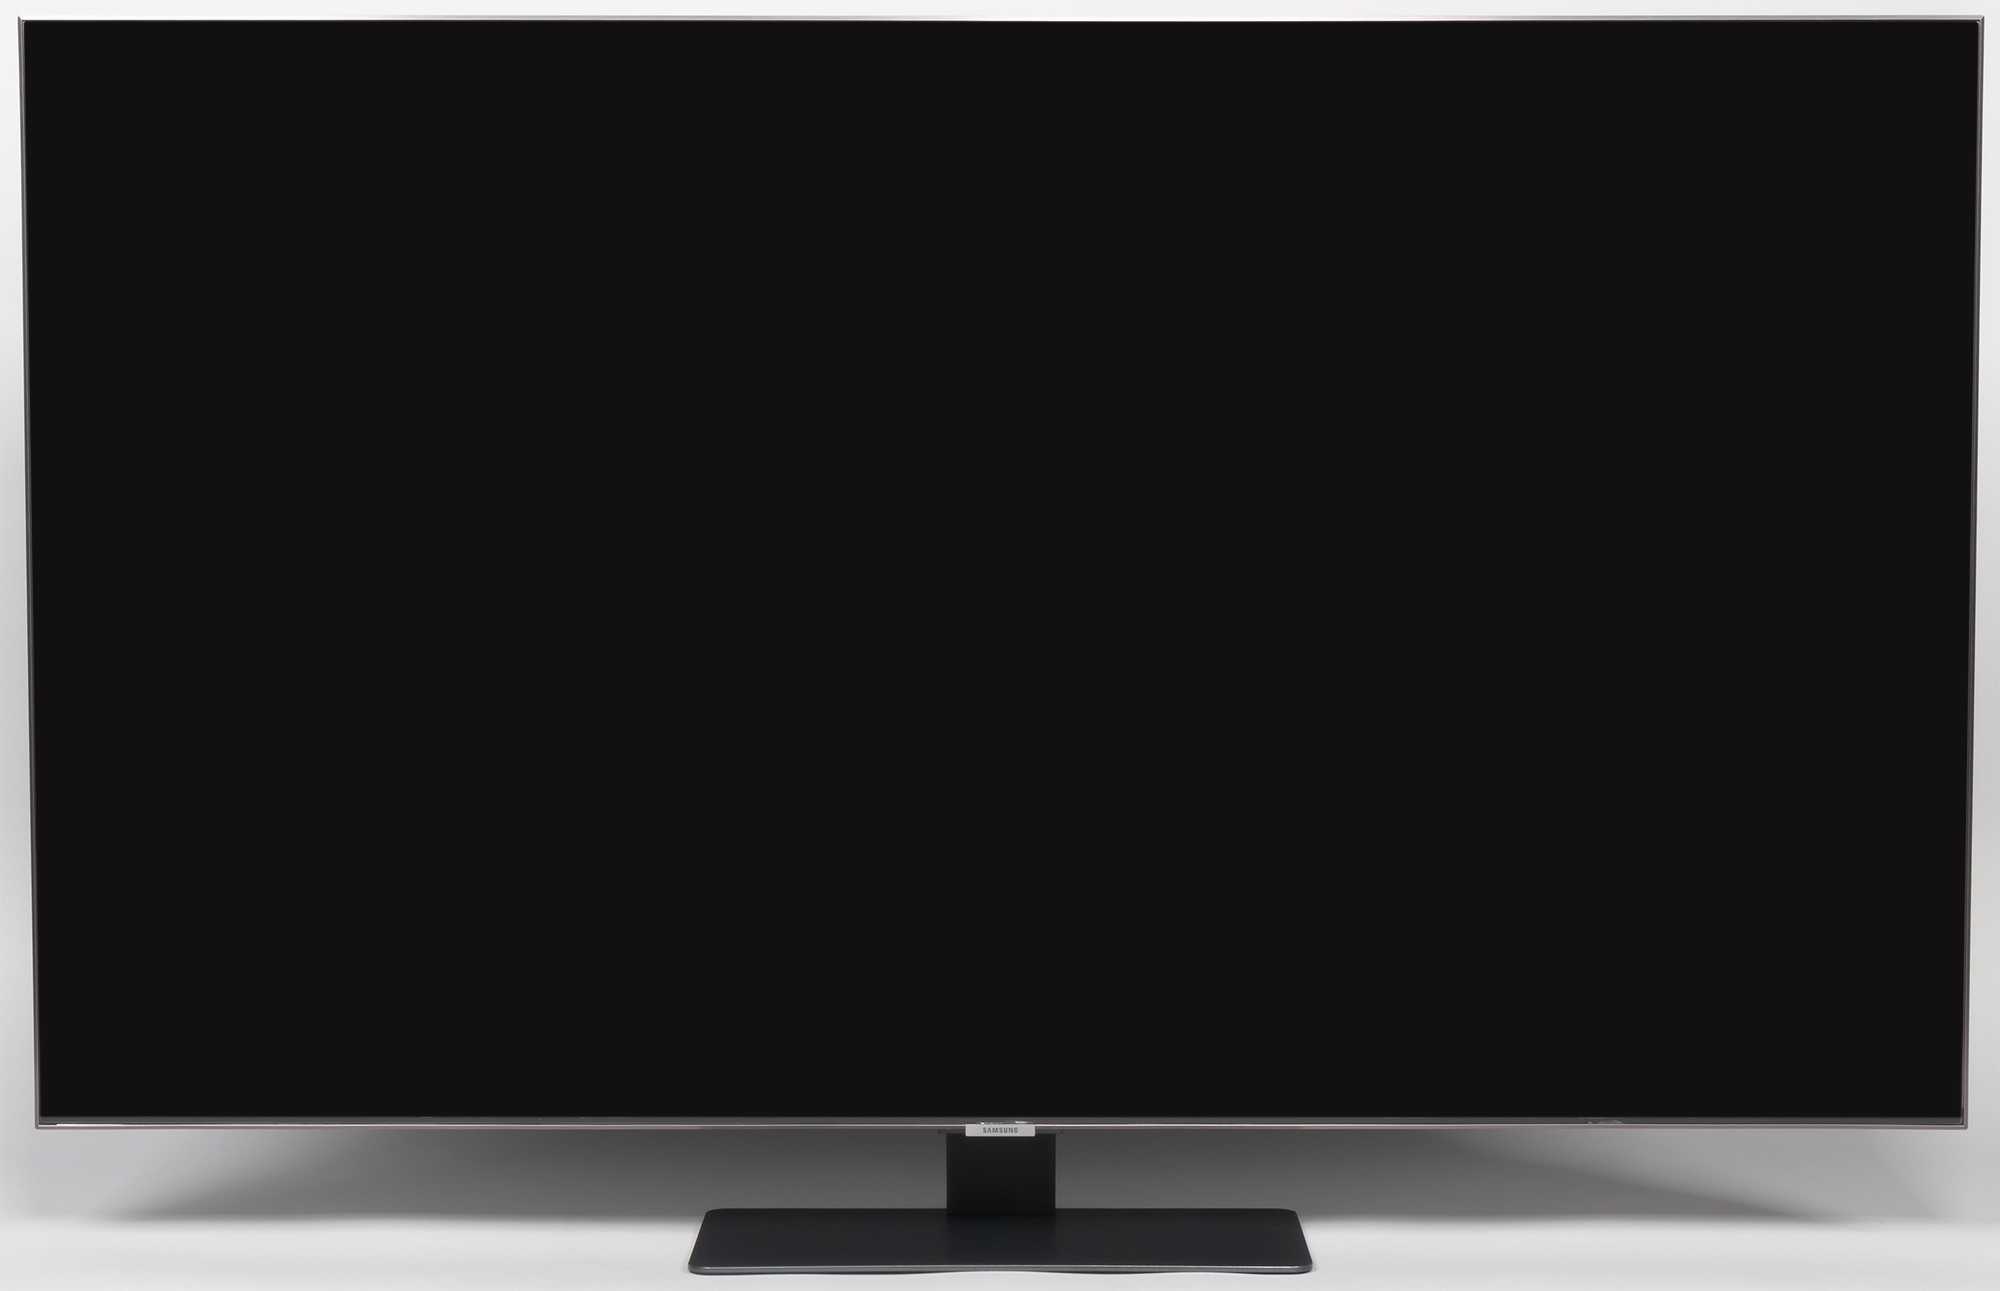 Телевизоры samsung q80t сравнить с q80r, q80n 2020-2018 |